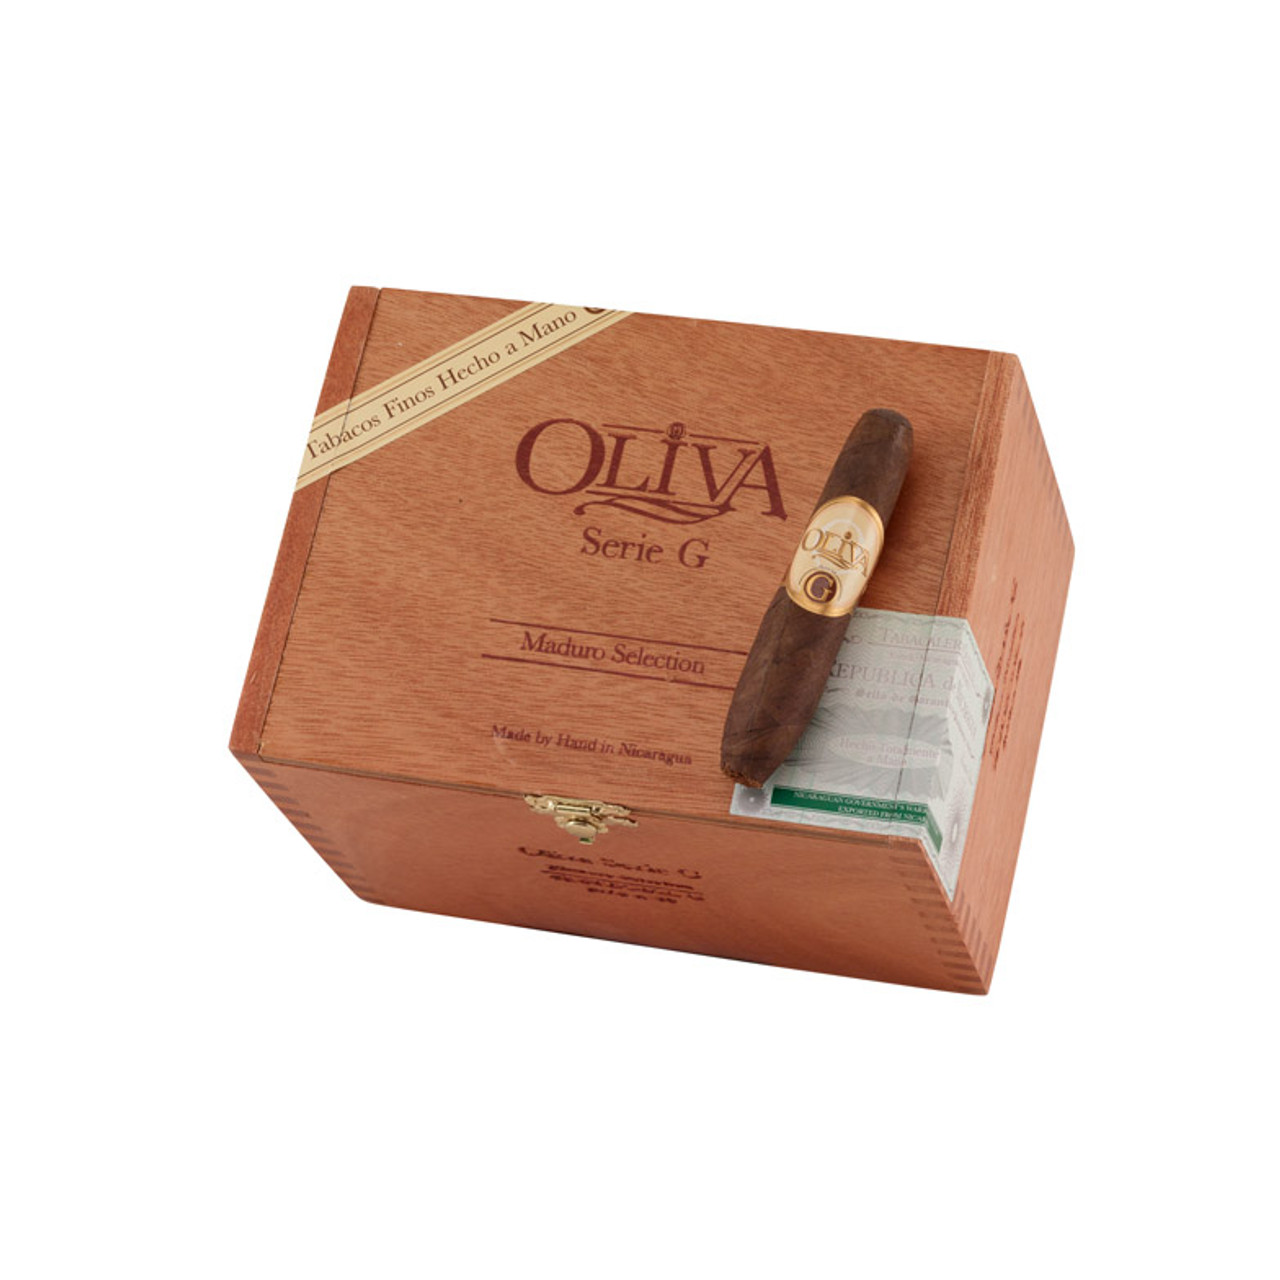 Oliva Serie G Special G Maduro Cigars - 3.75 x 48 (Box of 48) *Box